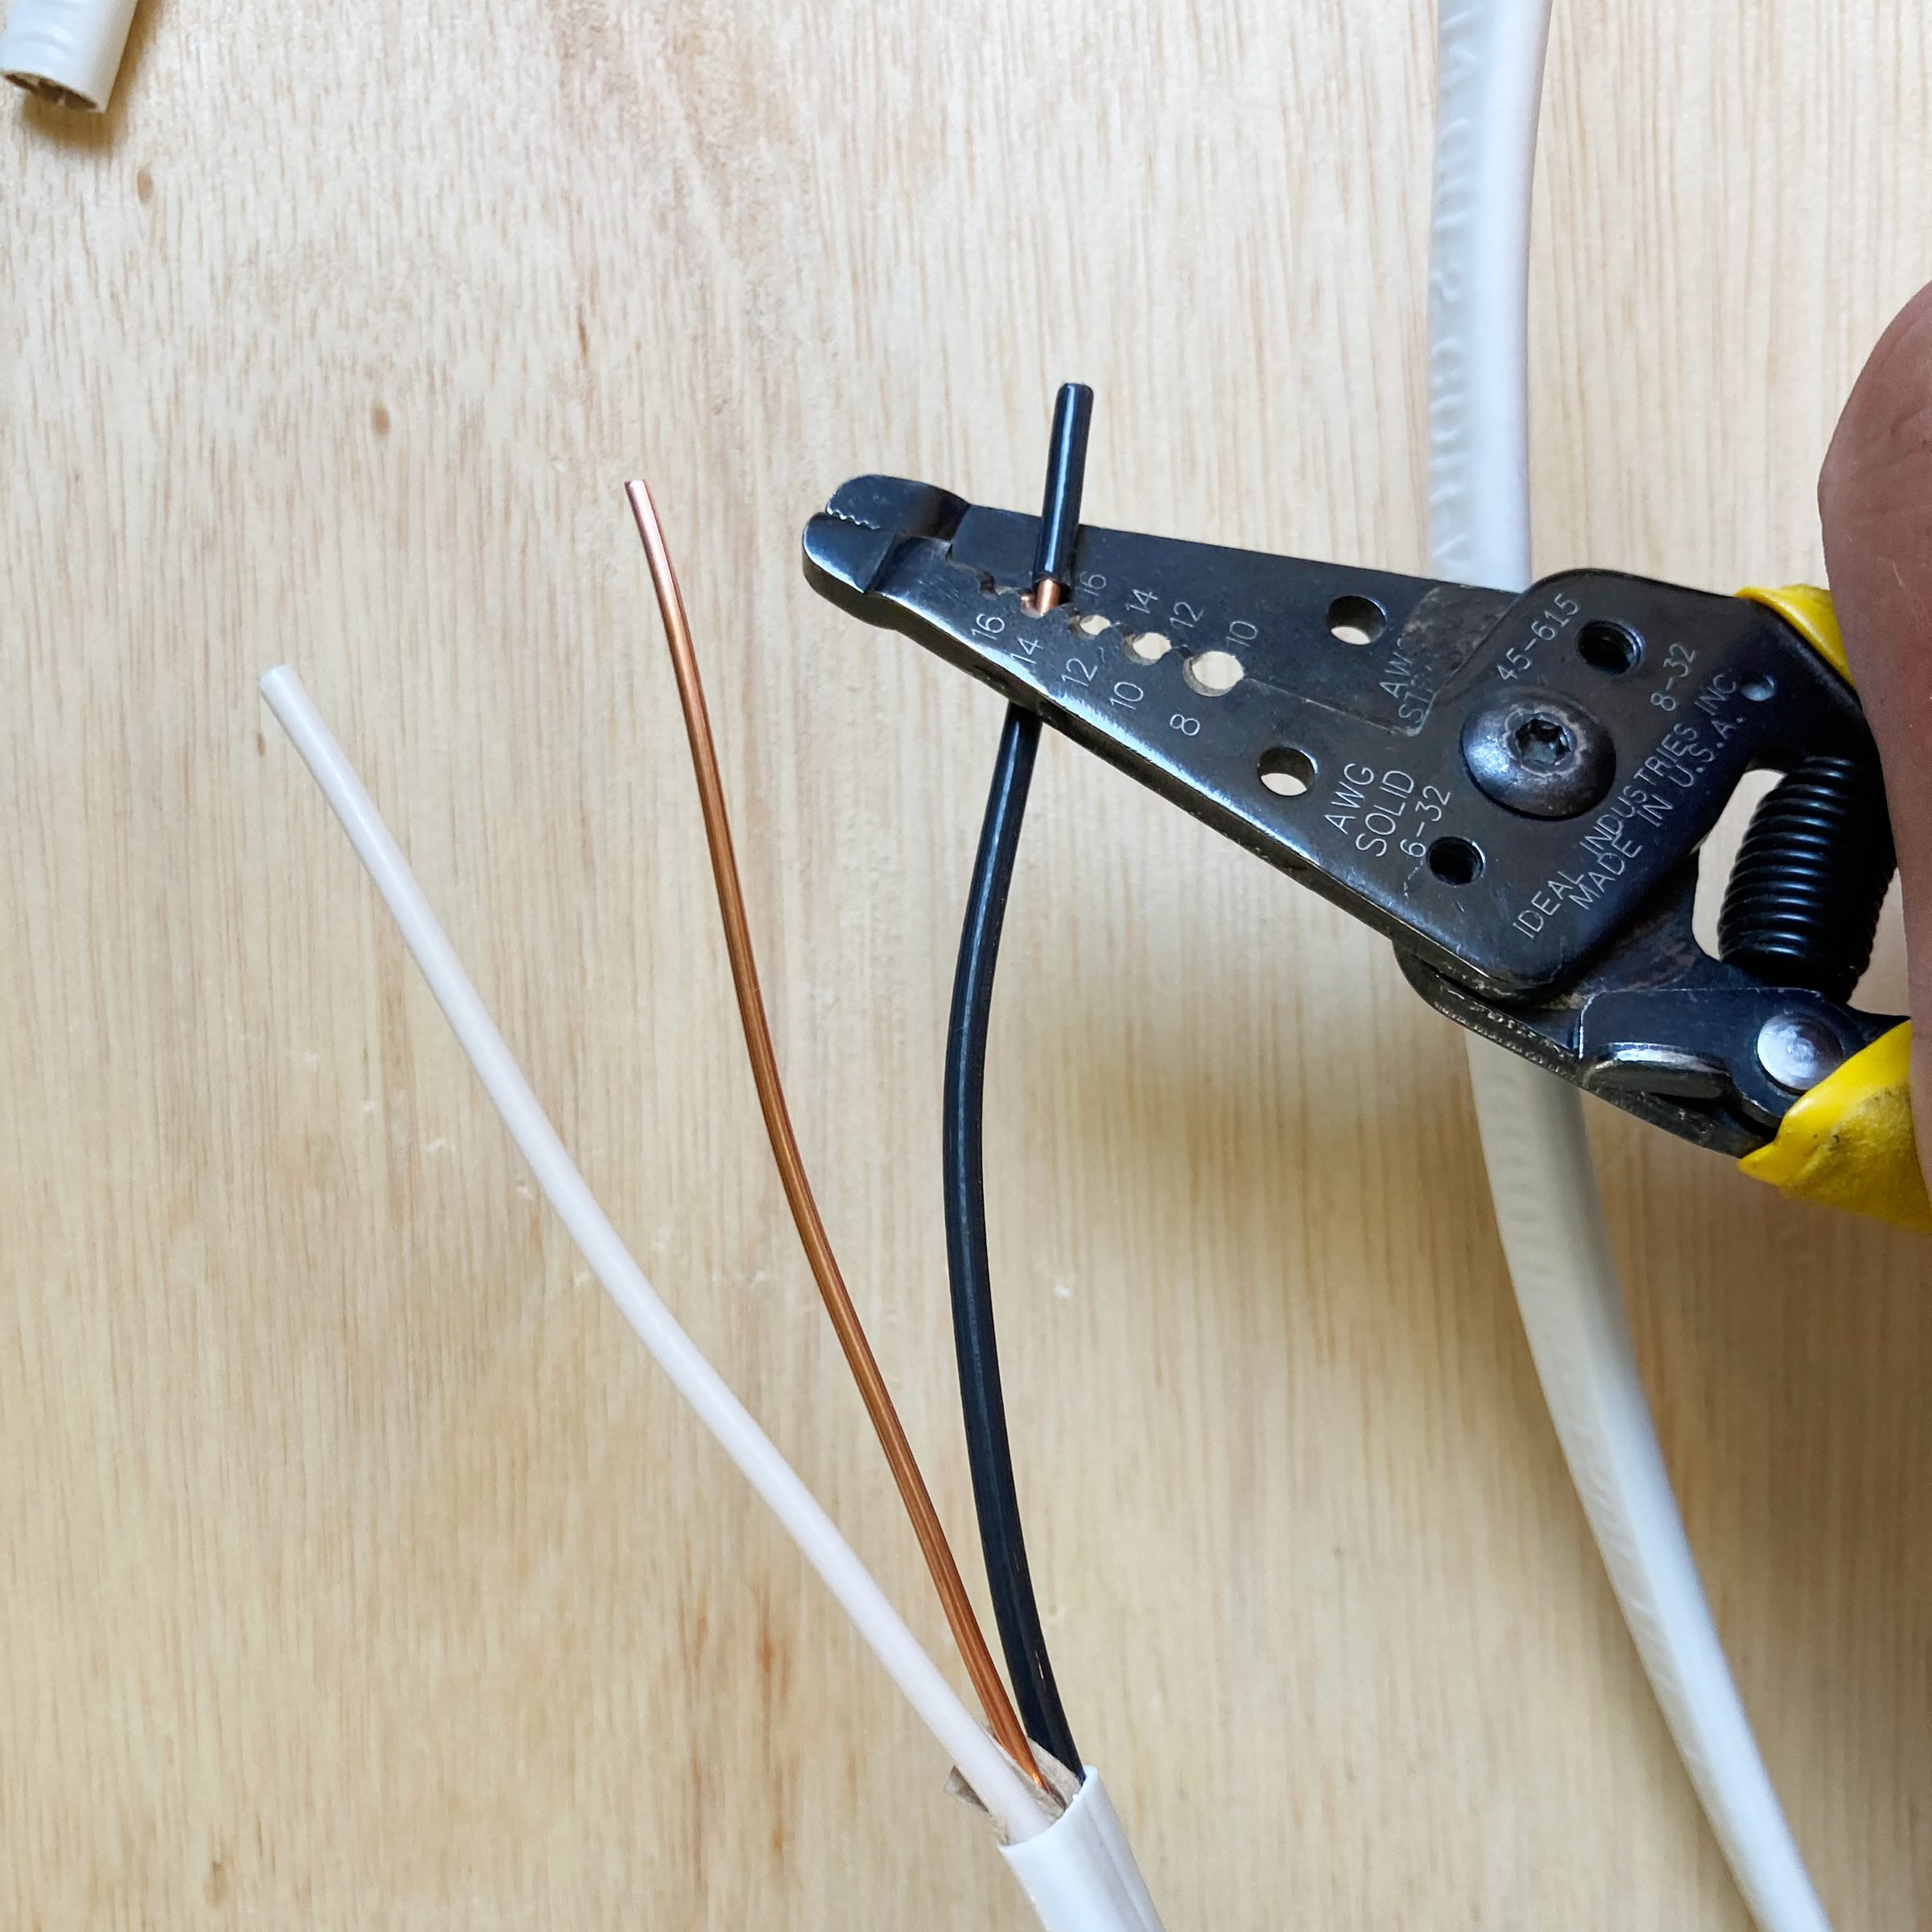 How To Splice Wires (DIY)